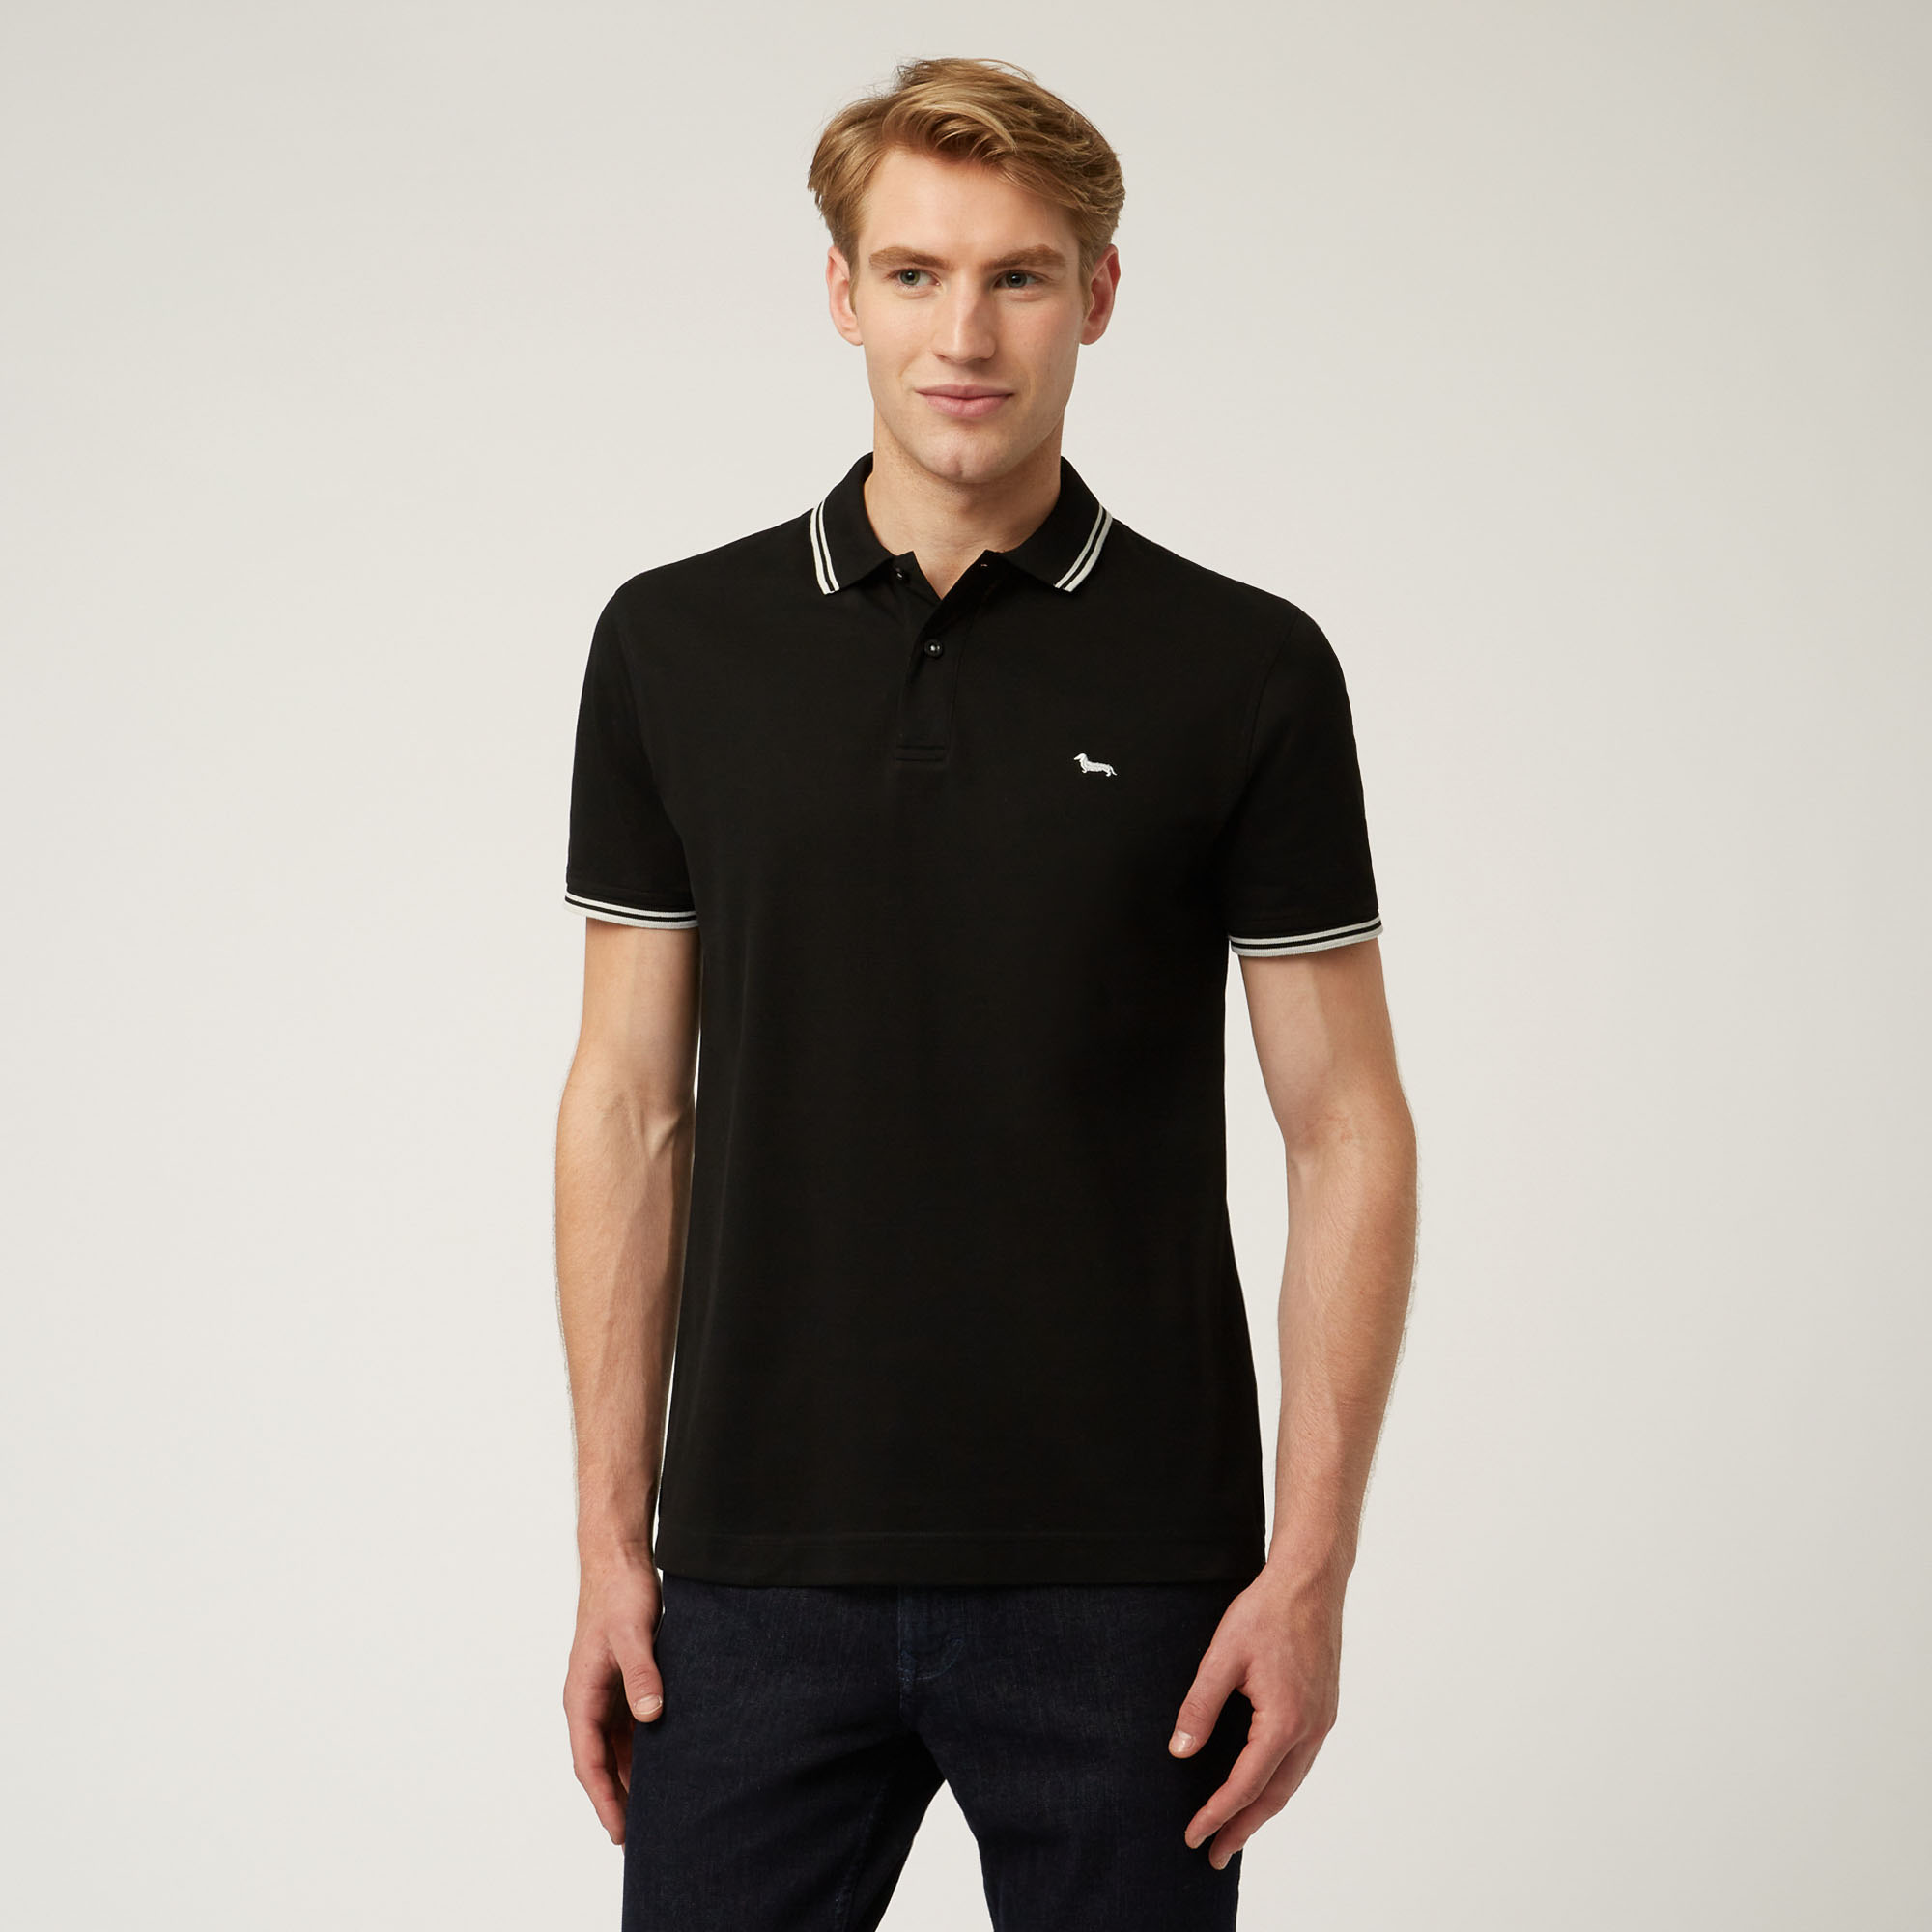 Essentials polo shirt in plain coloured cotton, Black, large